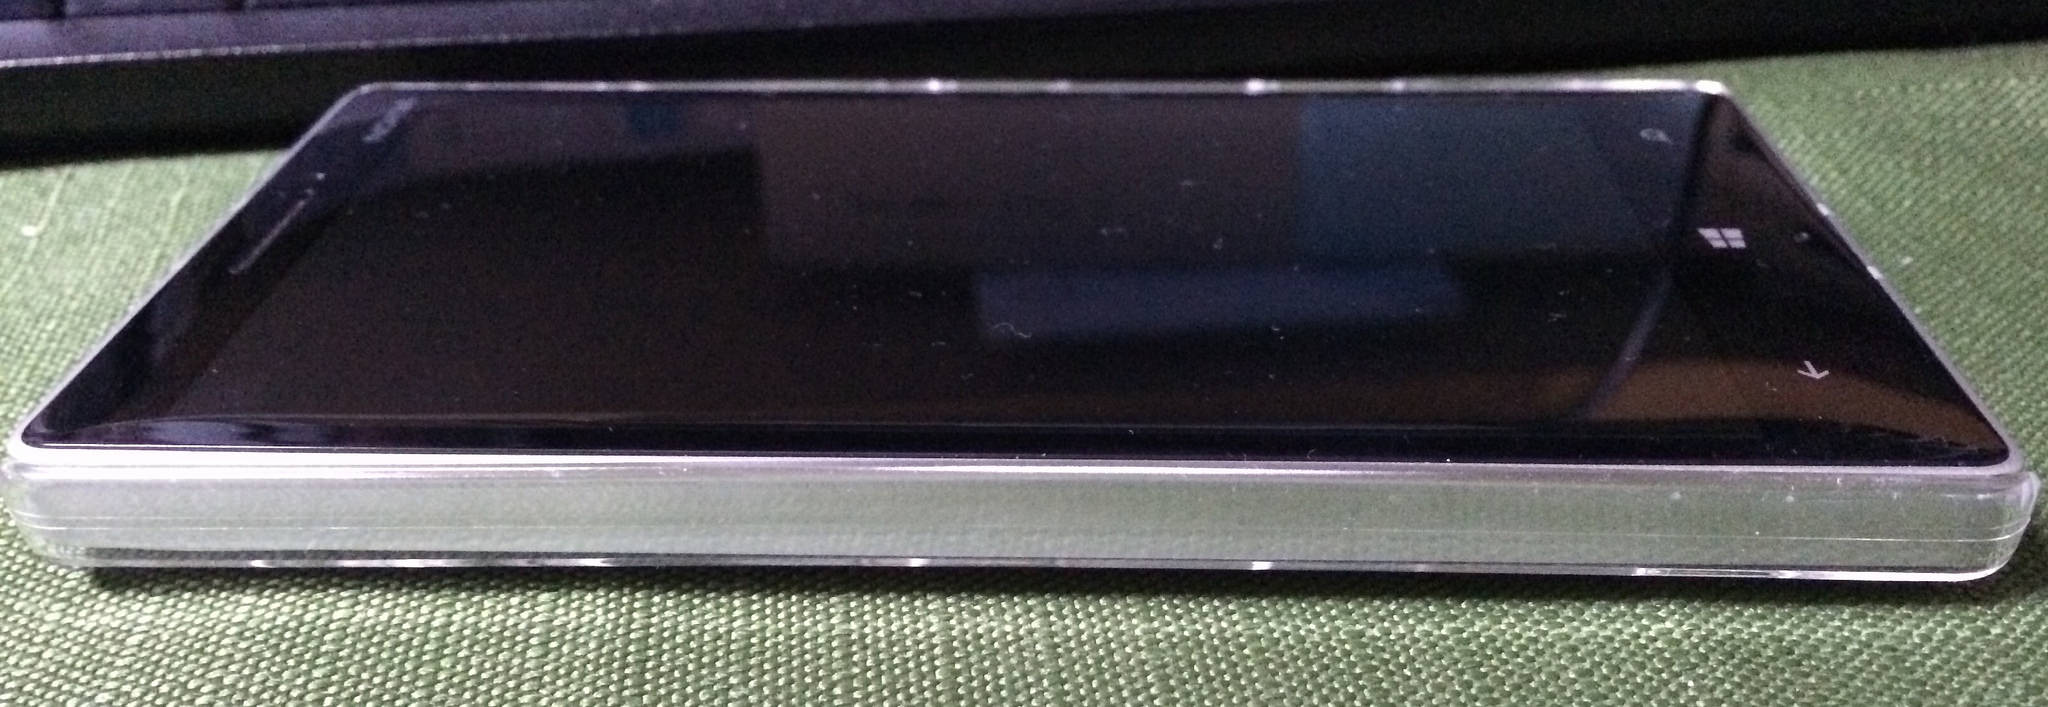 lumia-930-case3